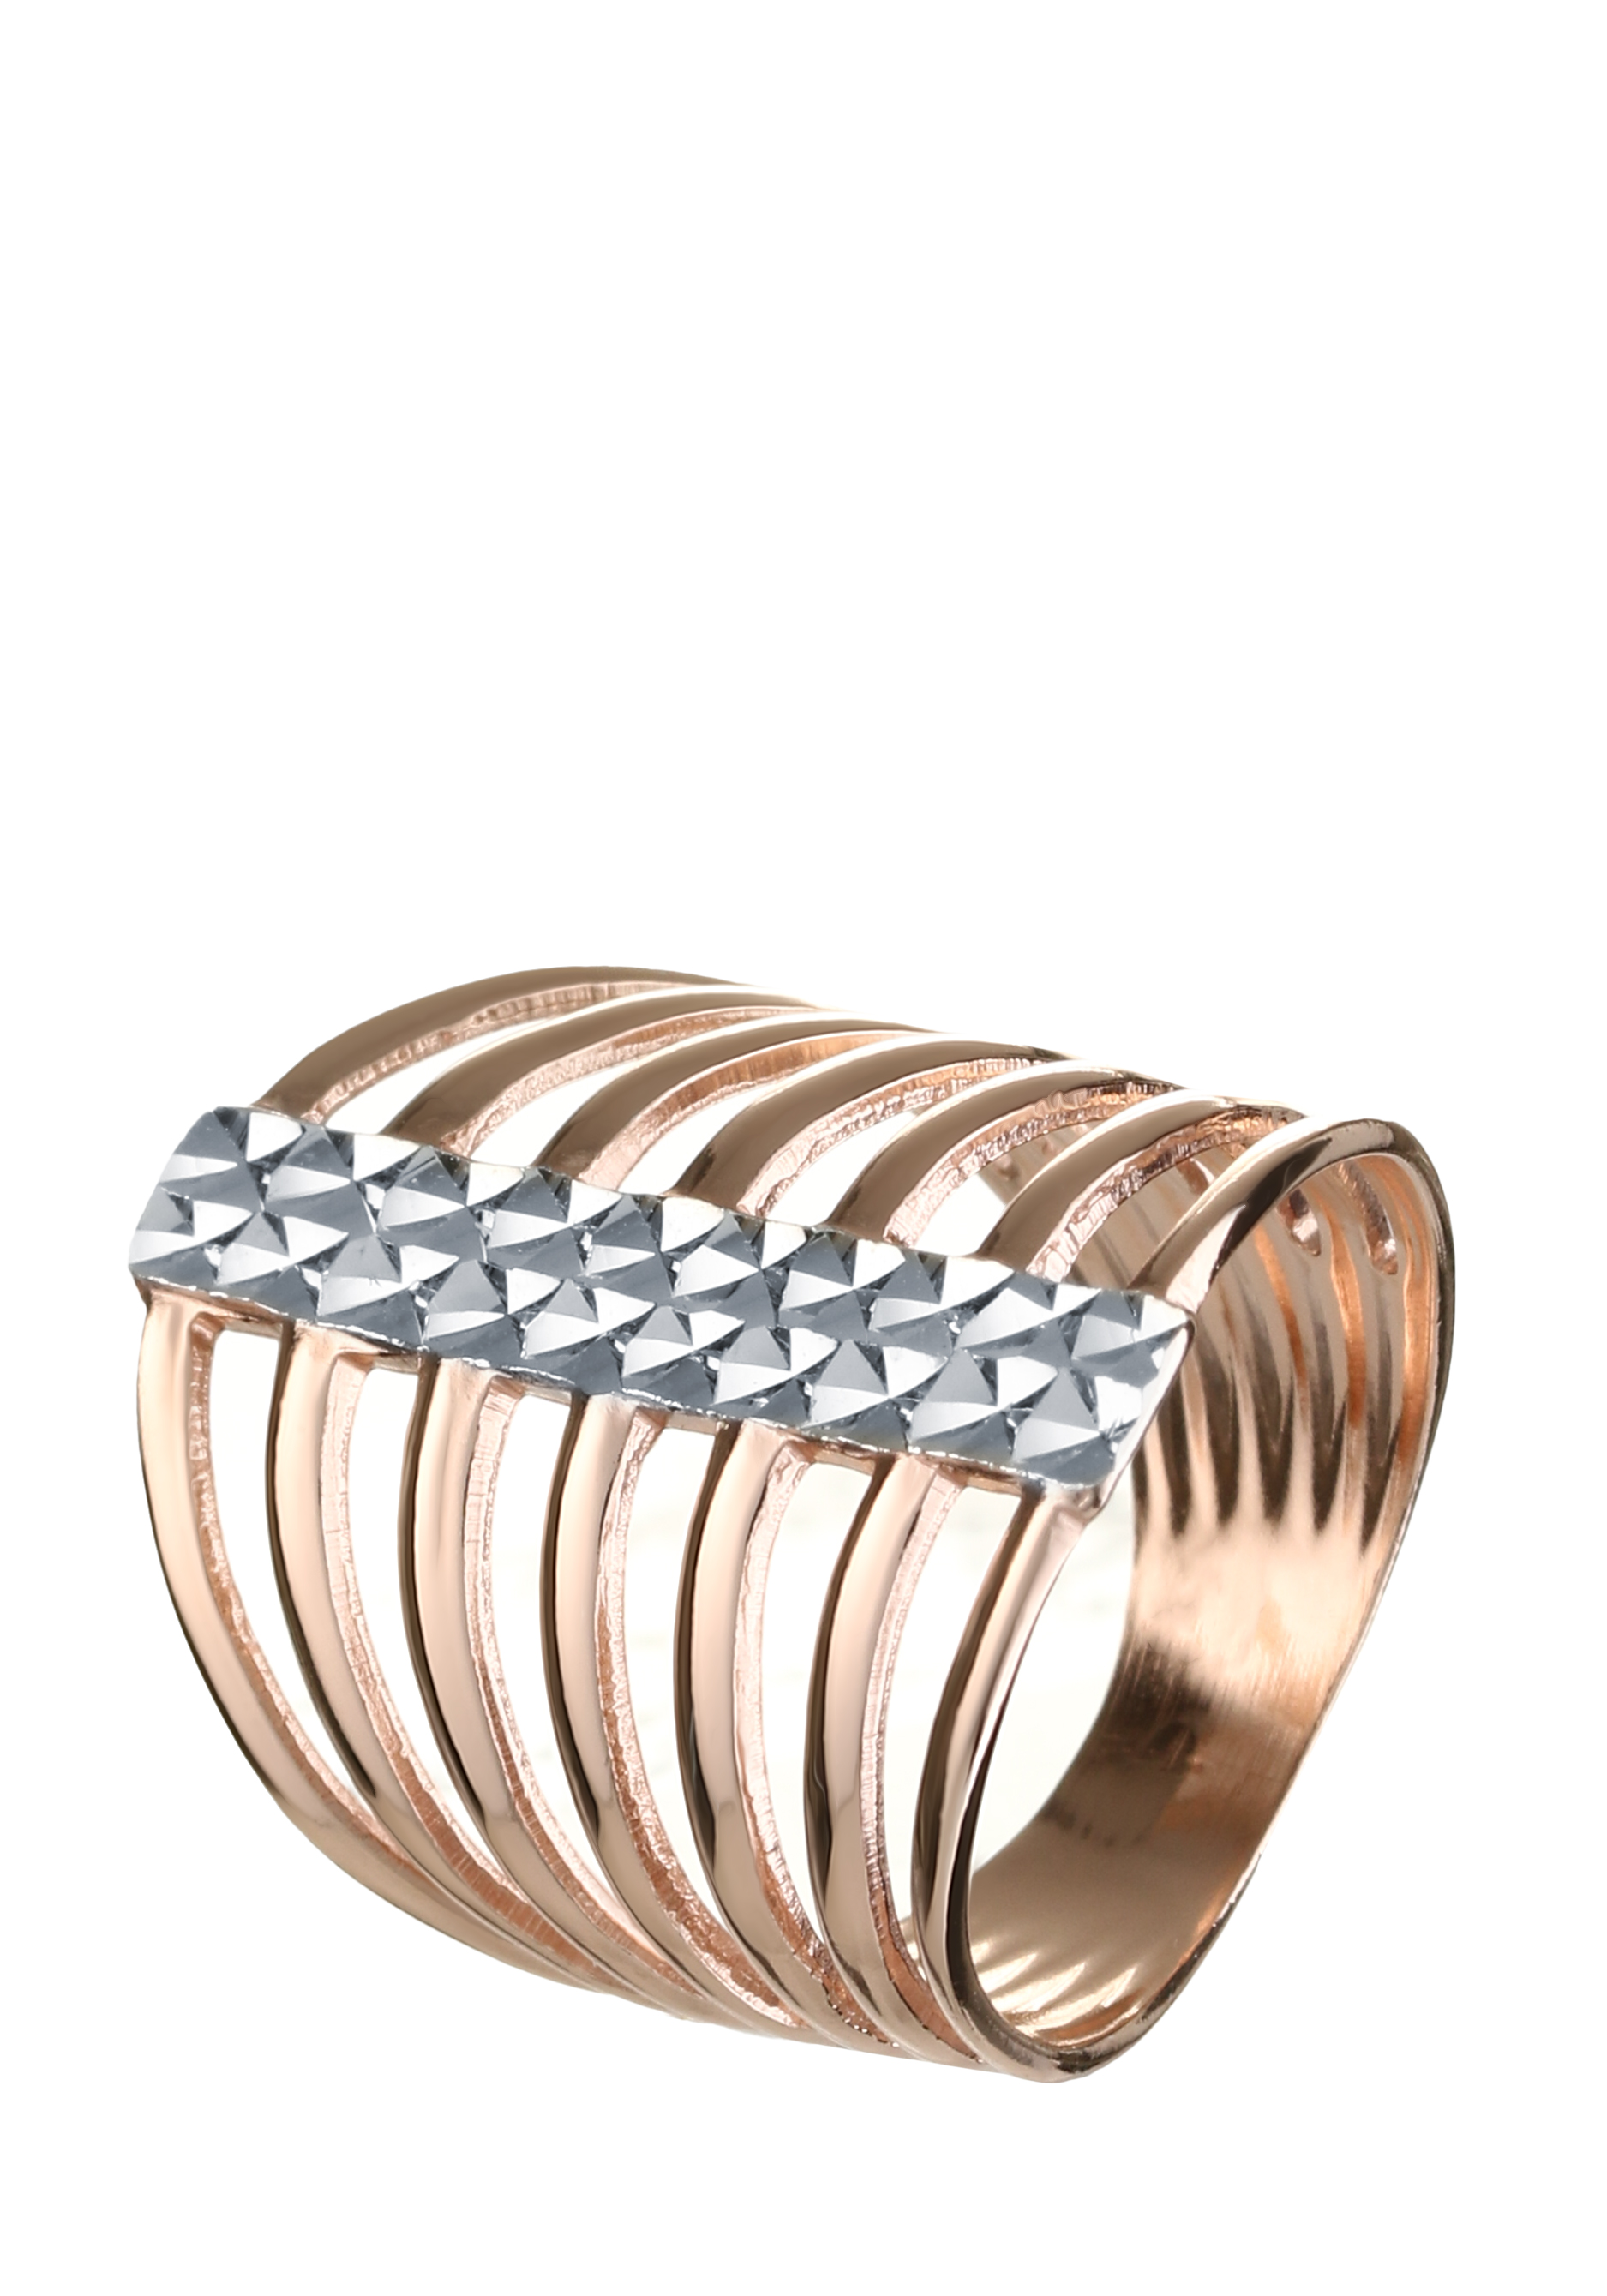 Кольцо серебряное Клеопатра серебряное кольцо цветочный ансамбль